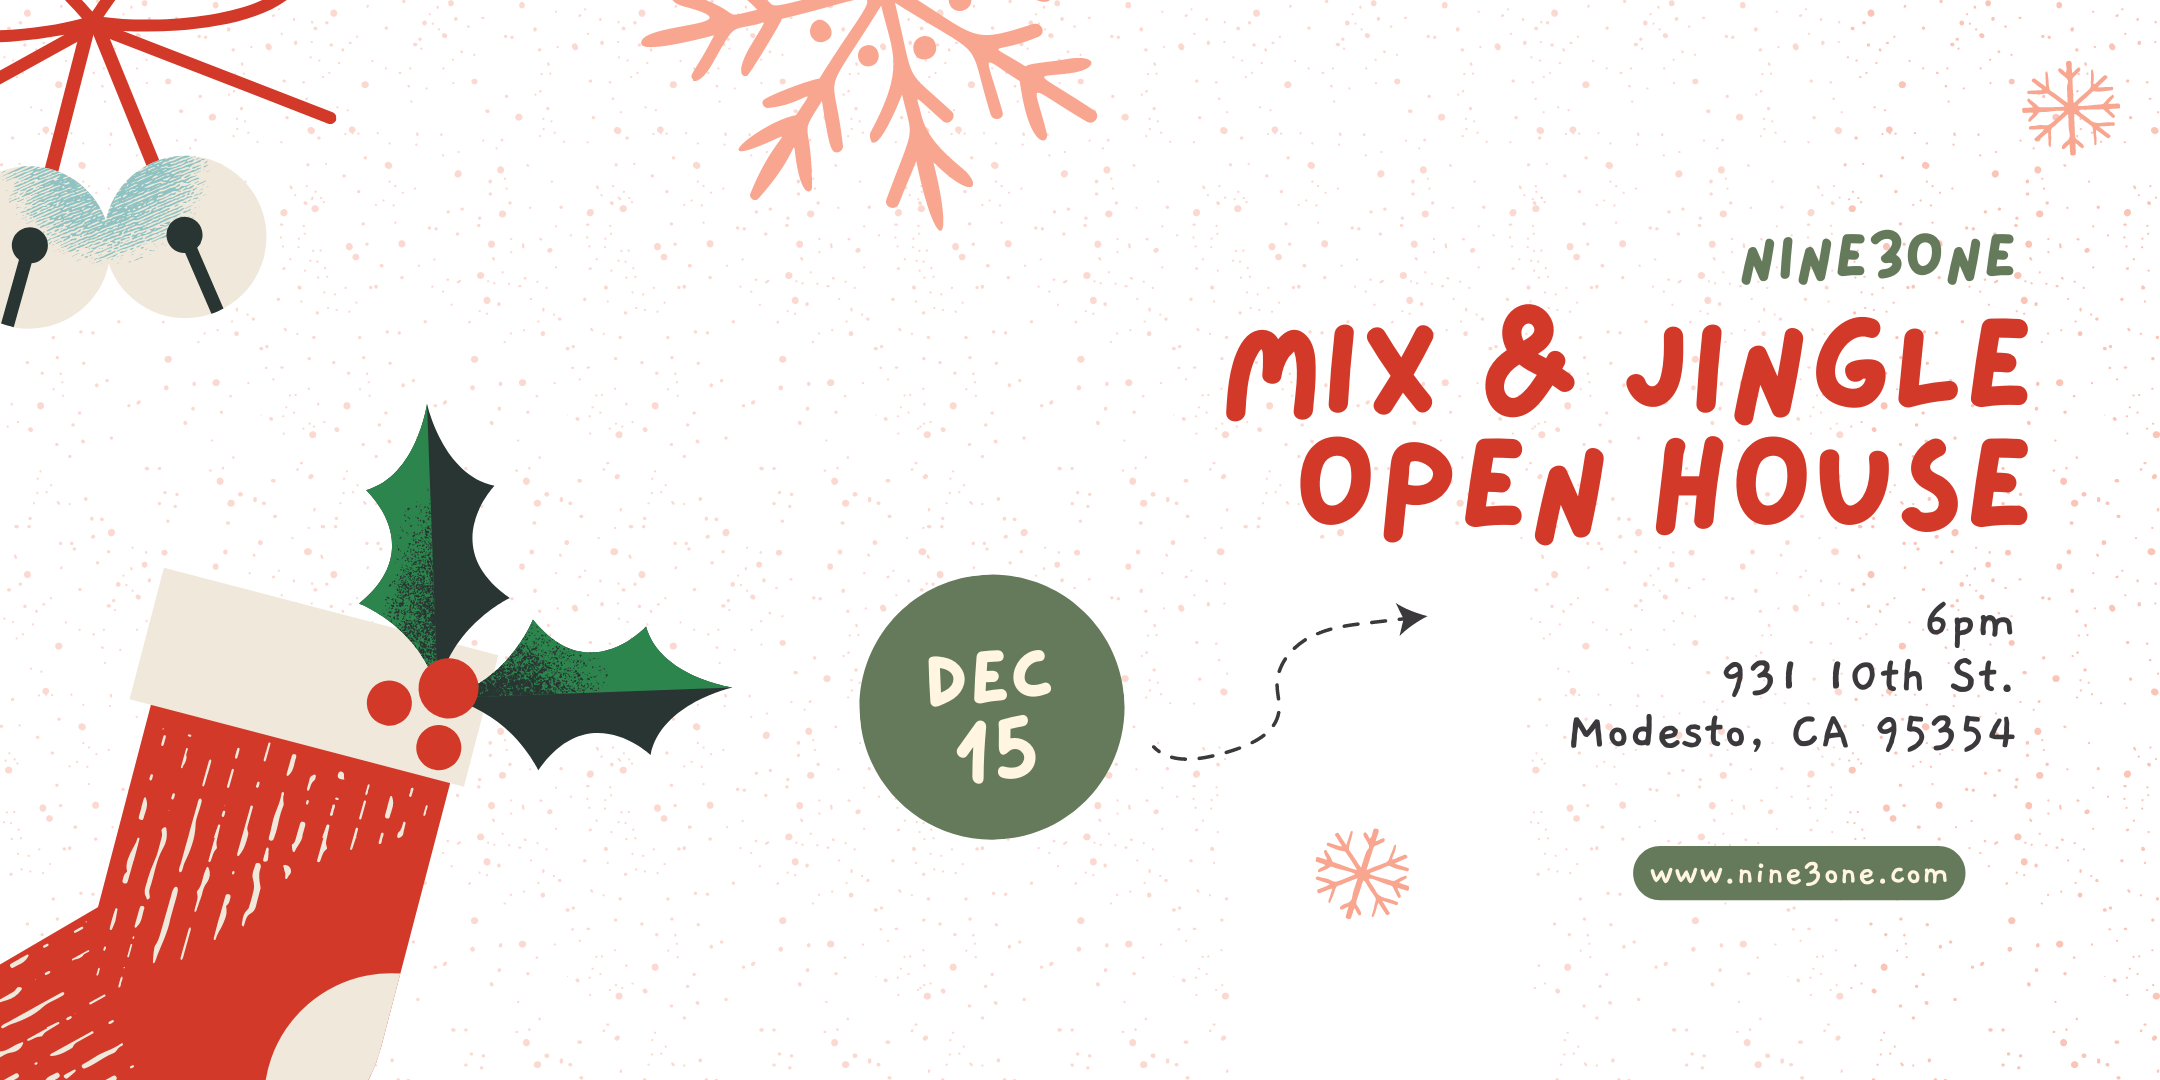 Mix & Jingle Open House